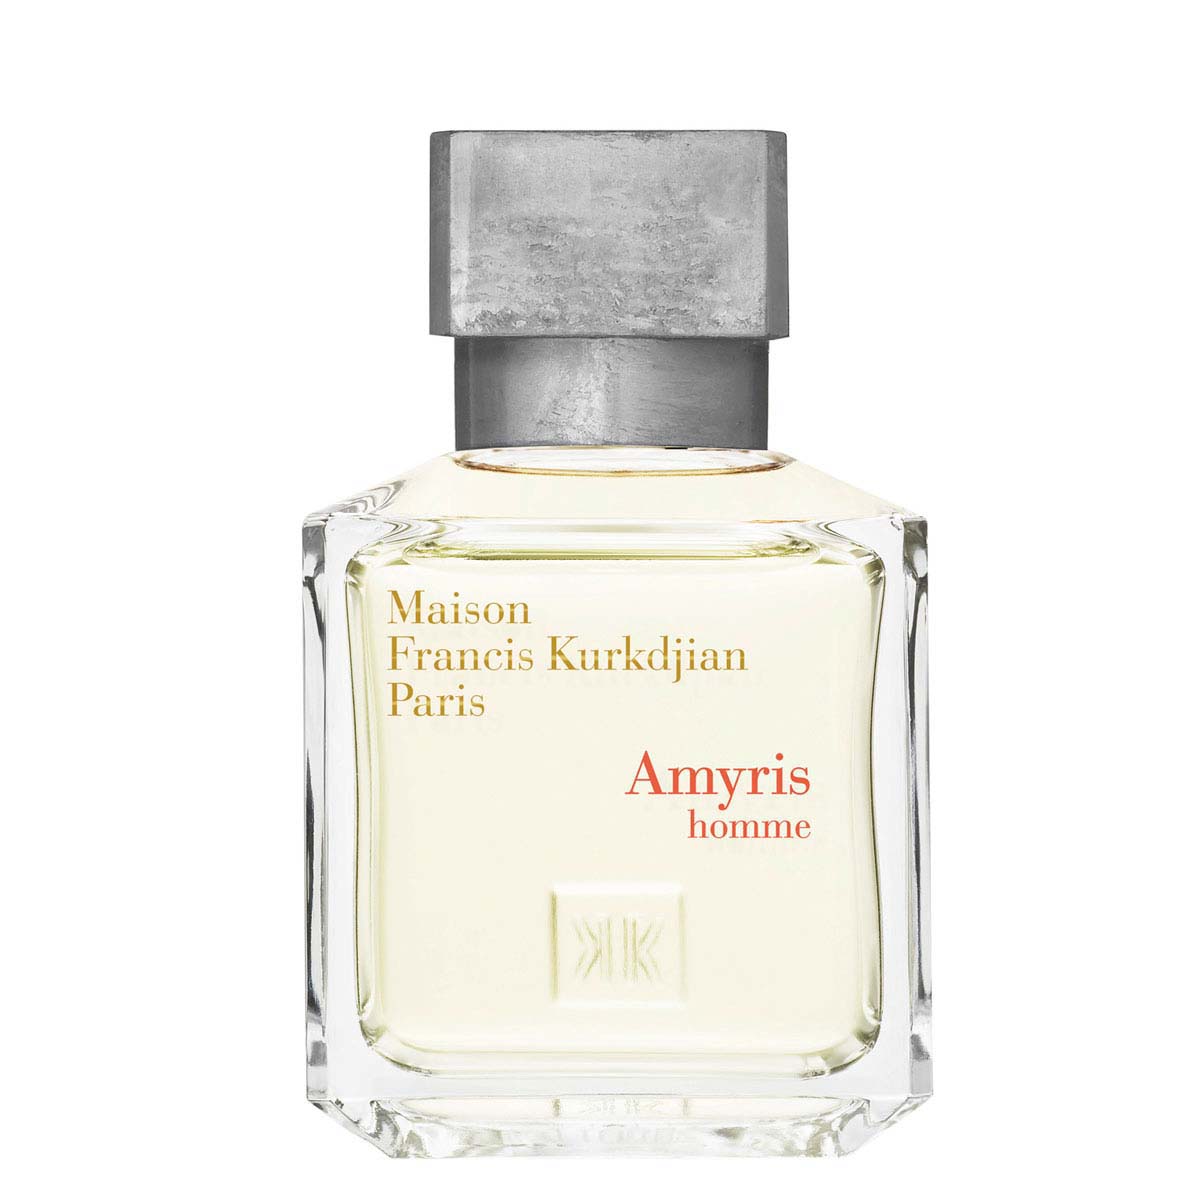 Maison Francis Kurkdjian – Amyris Homme EdT 70ml – anne gallwé beauty